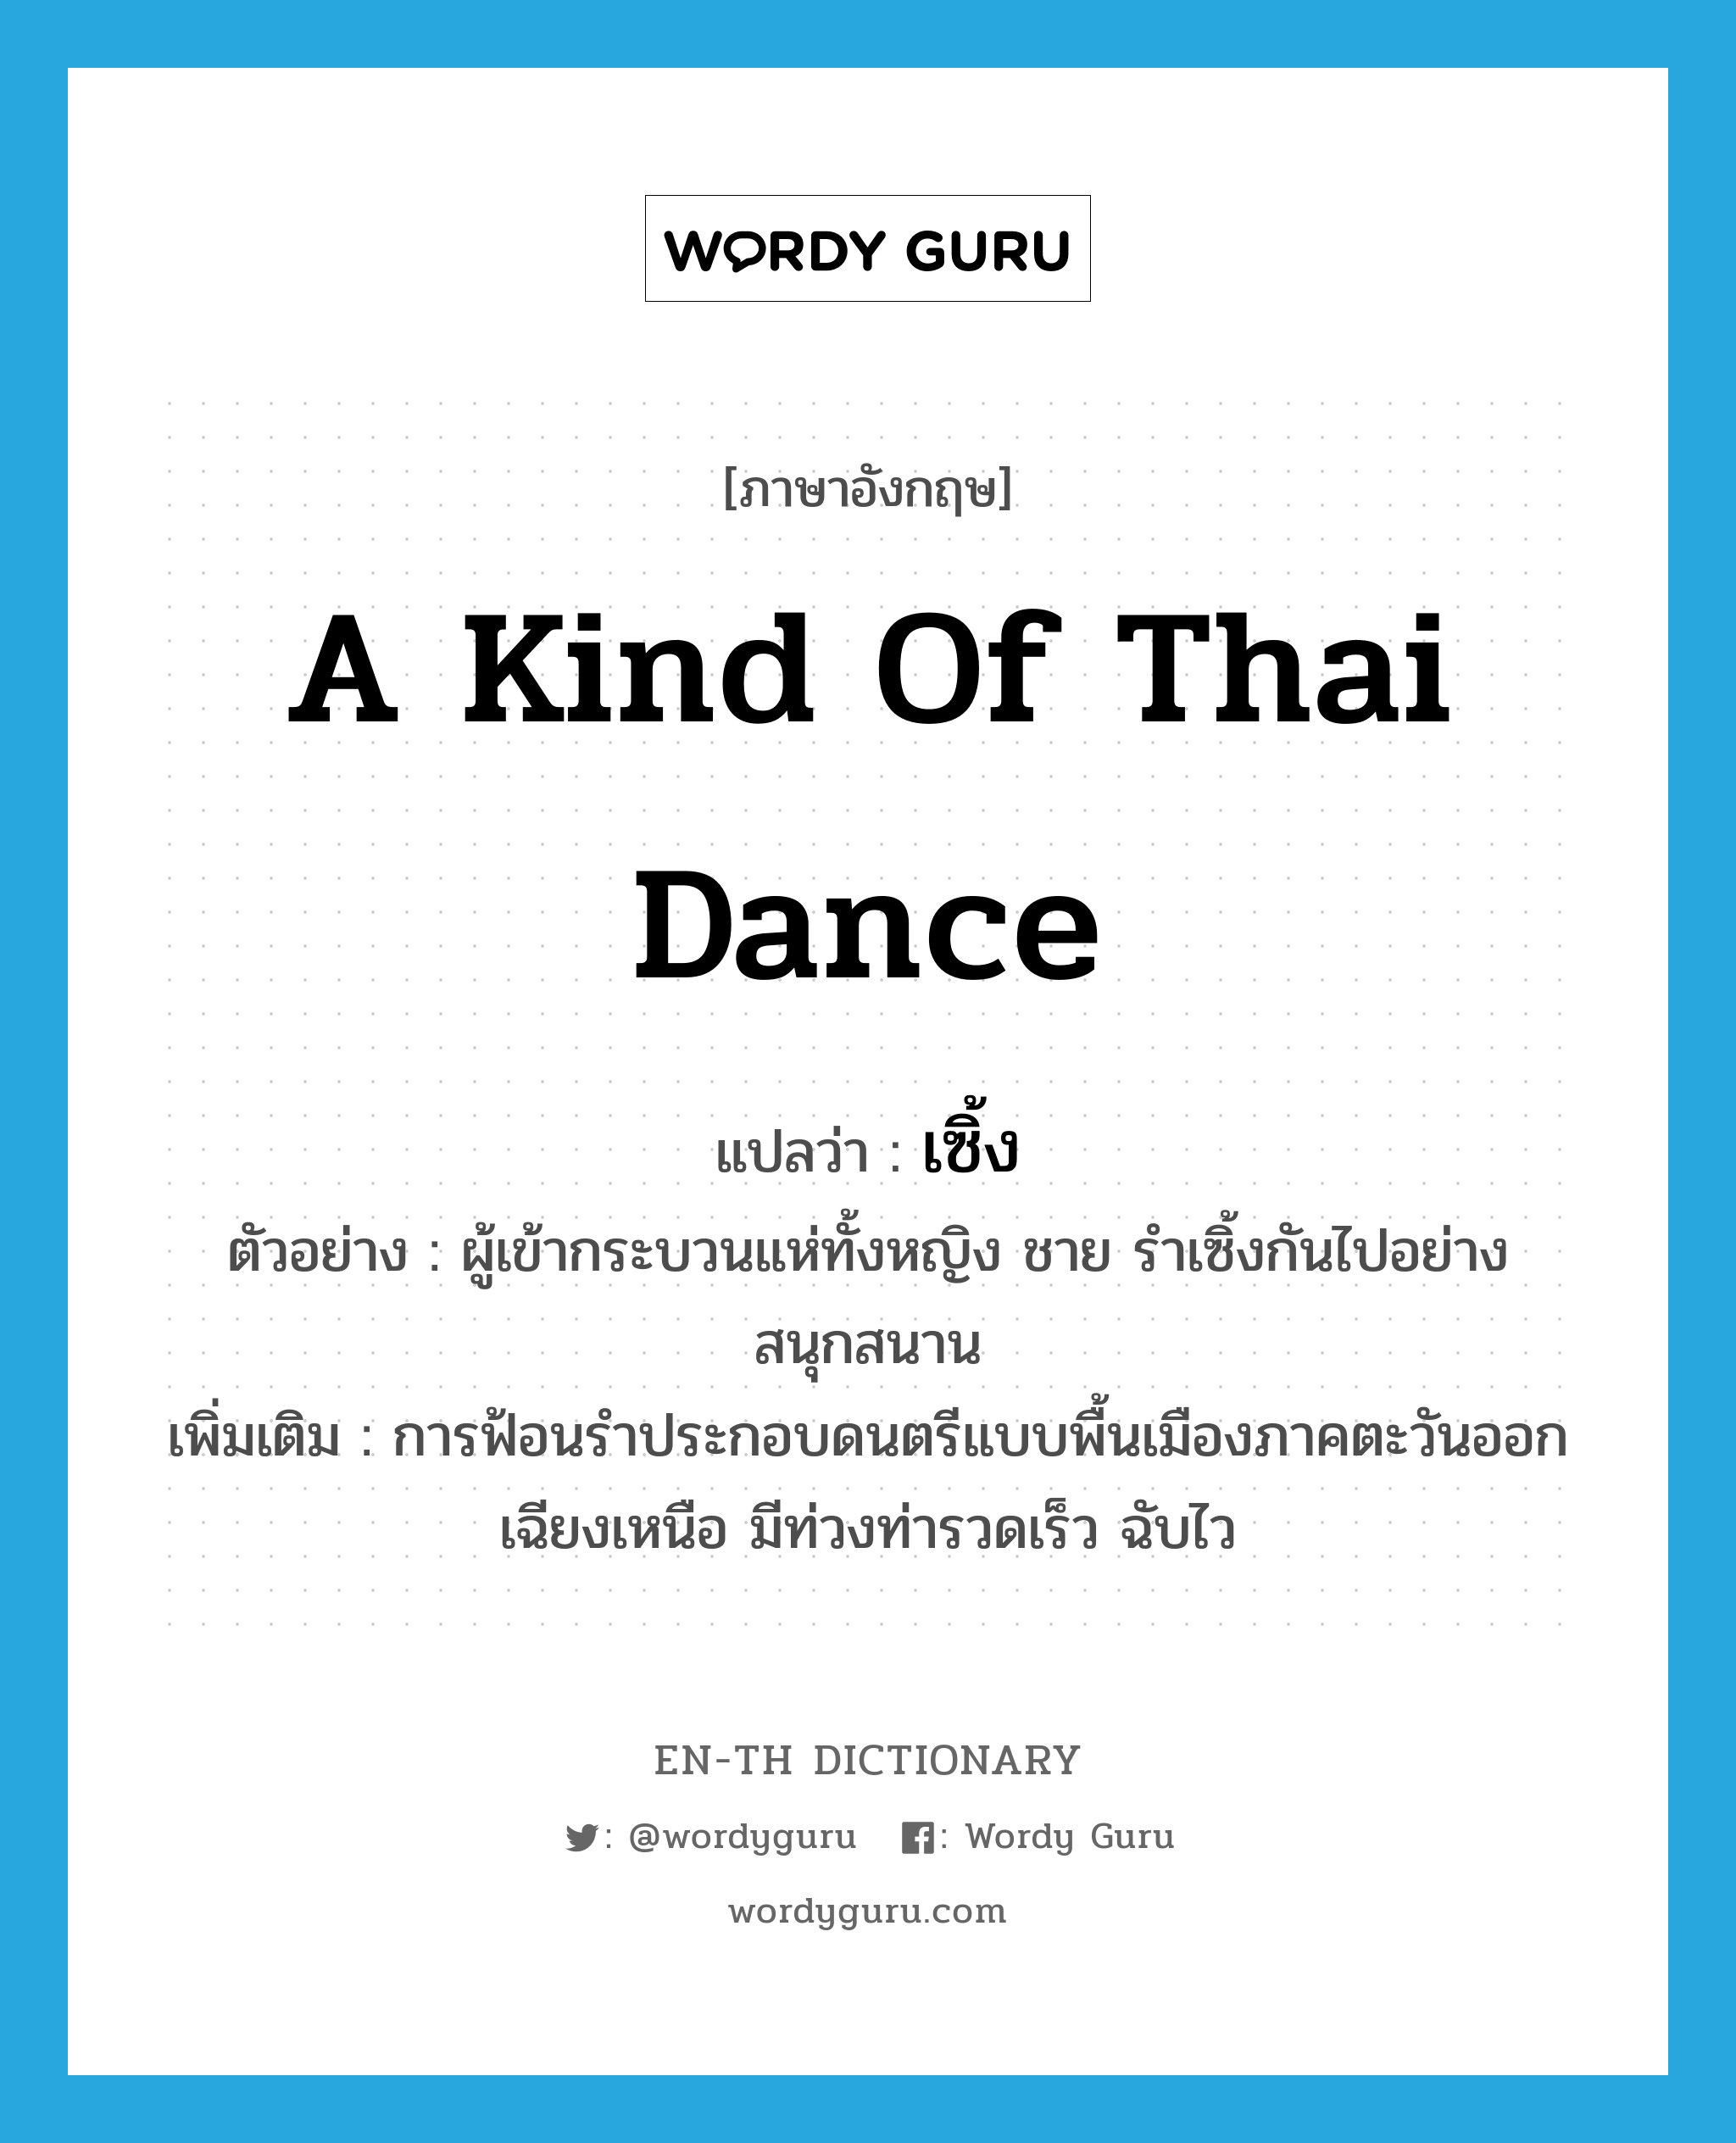 a kind of Thai dance แปลว่า? คำศัพท์ในกลุ่มประเภท N, คำศัพท์ภาษาอังกฤษ a kind of Thai dance แปลว่า เซิ้ง ประเภท N ตัวอย่าง ผู้เข้ากระบวนแห่ทั้งหญิง ชาย รำเซิ้งกันไปอย่างสนุกสนาน เพิ่มเติม การฟ้อนรำประกอบดนตรีแบบพื้นเมืองภาคตะวันออกเฉียงเหนือ มีท่วงท่ารวดเร็ว ฉับไว หมวด N